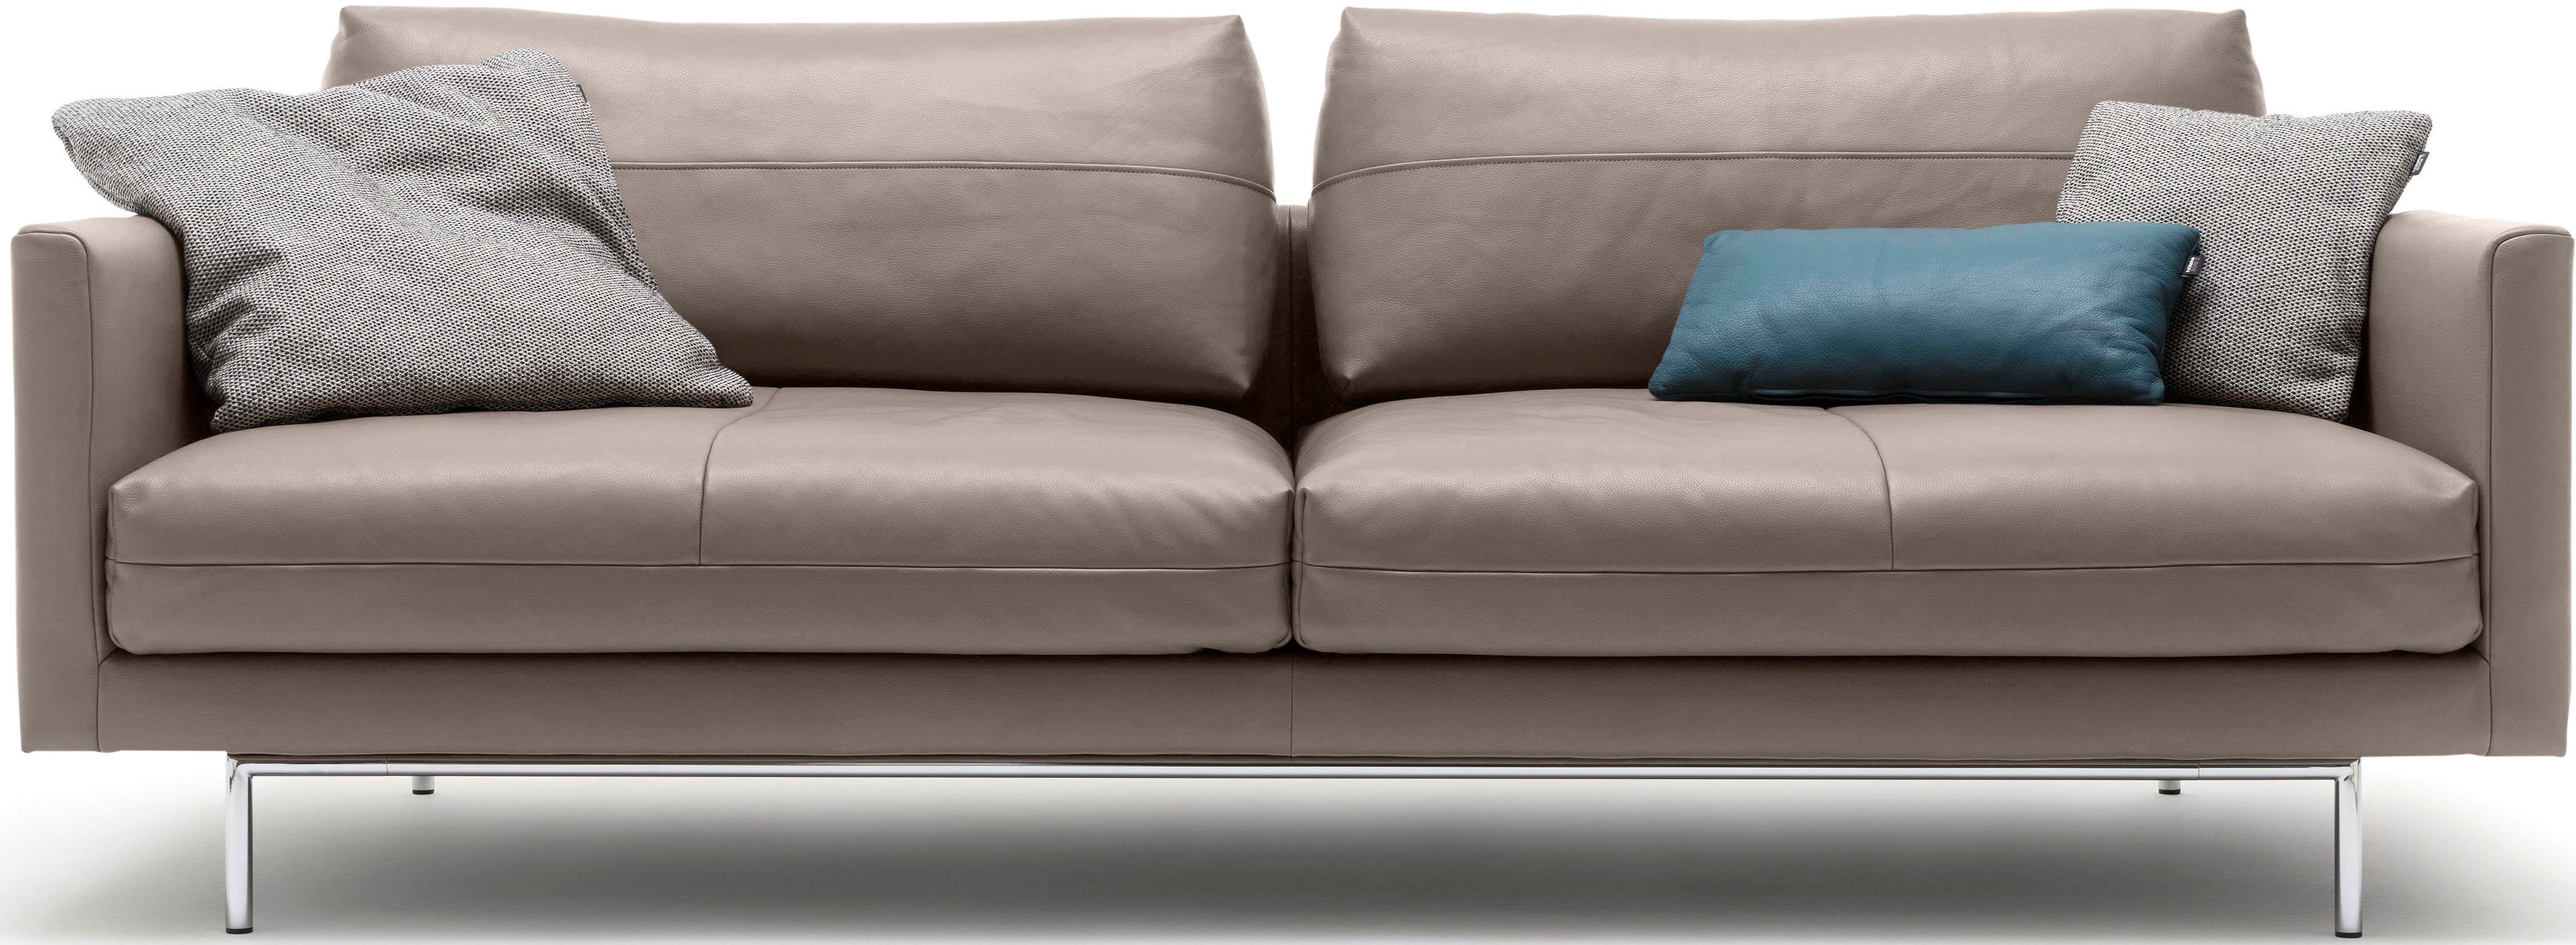 beigegrau | beigegrau 3-Sitzer hülsta sofa